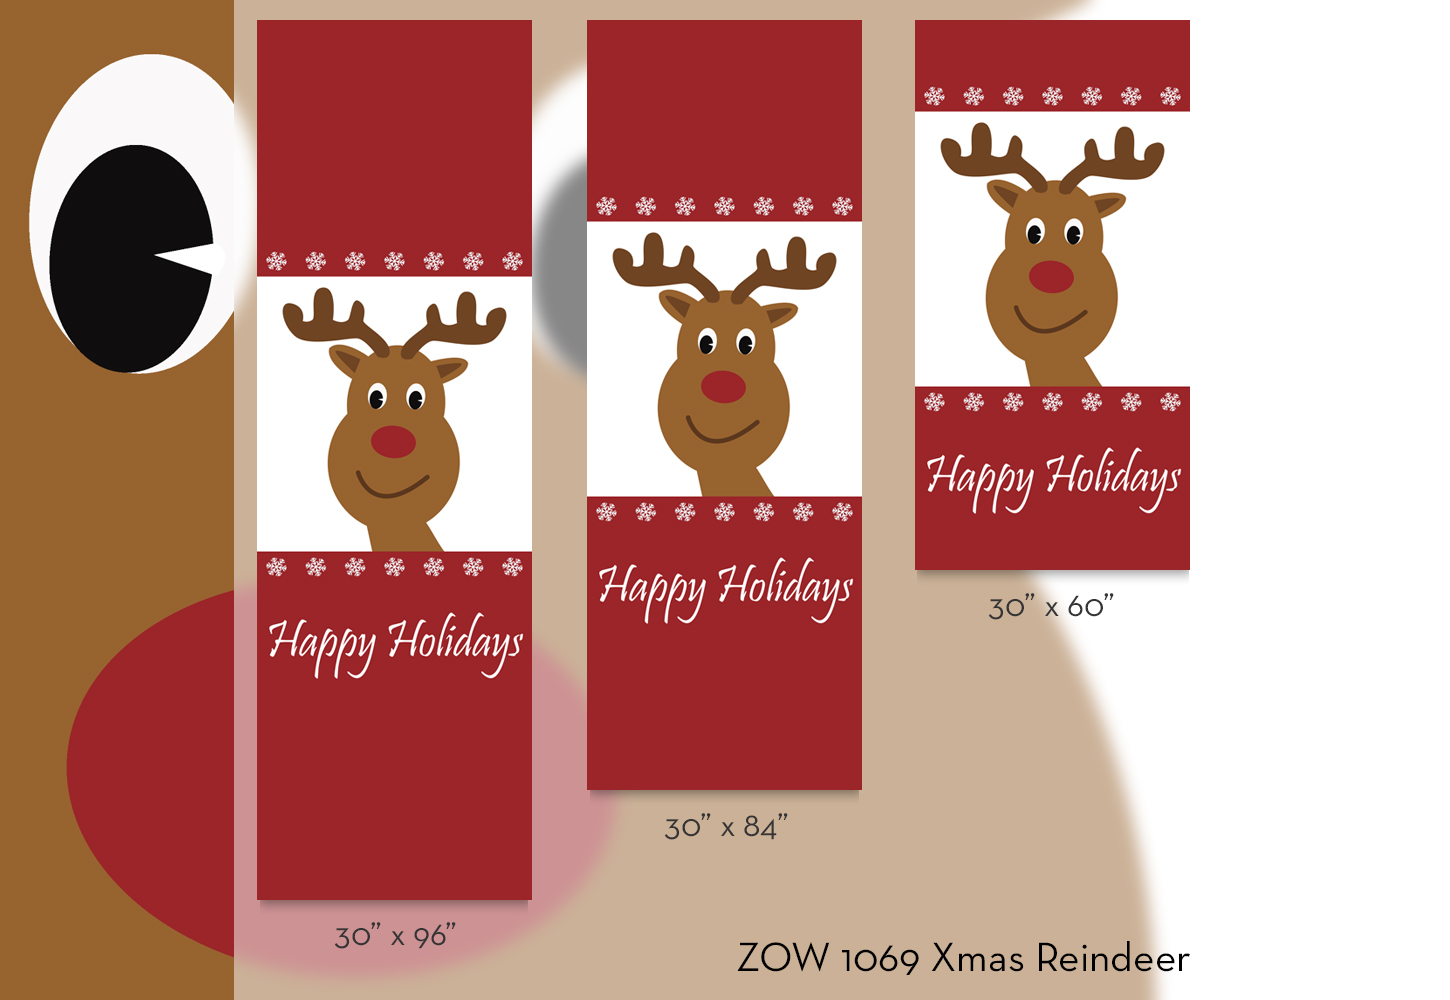 ZOW 1069 Xmas Reindeer